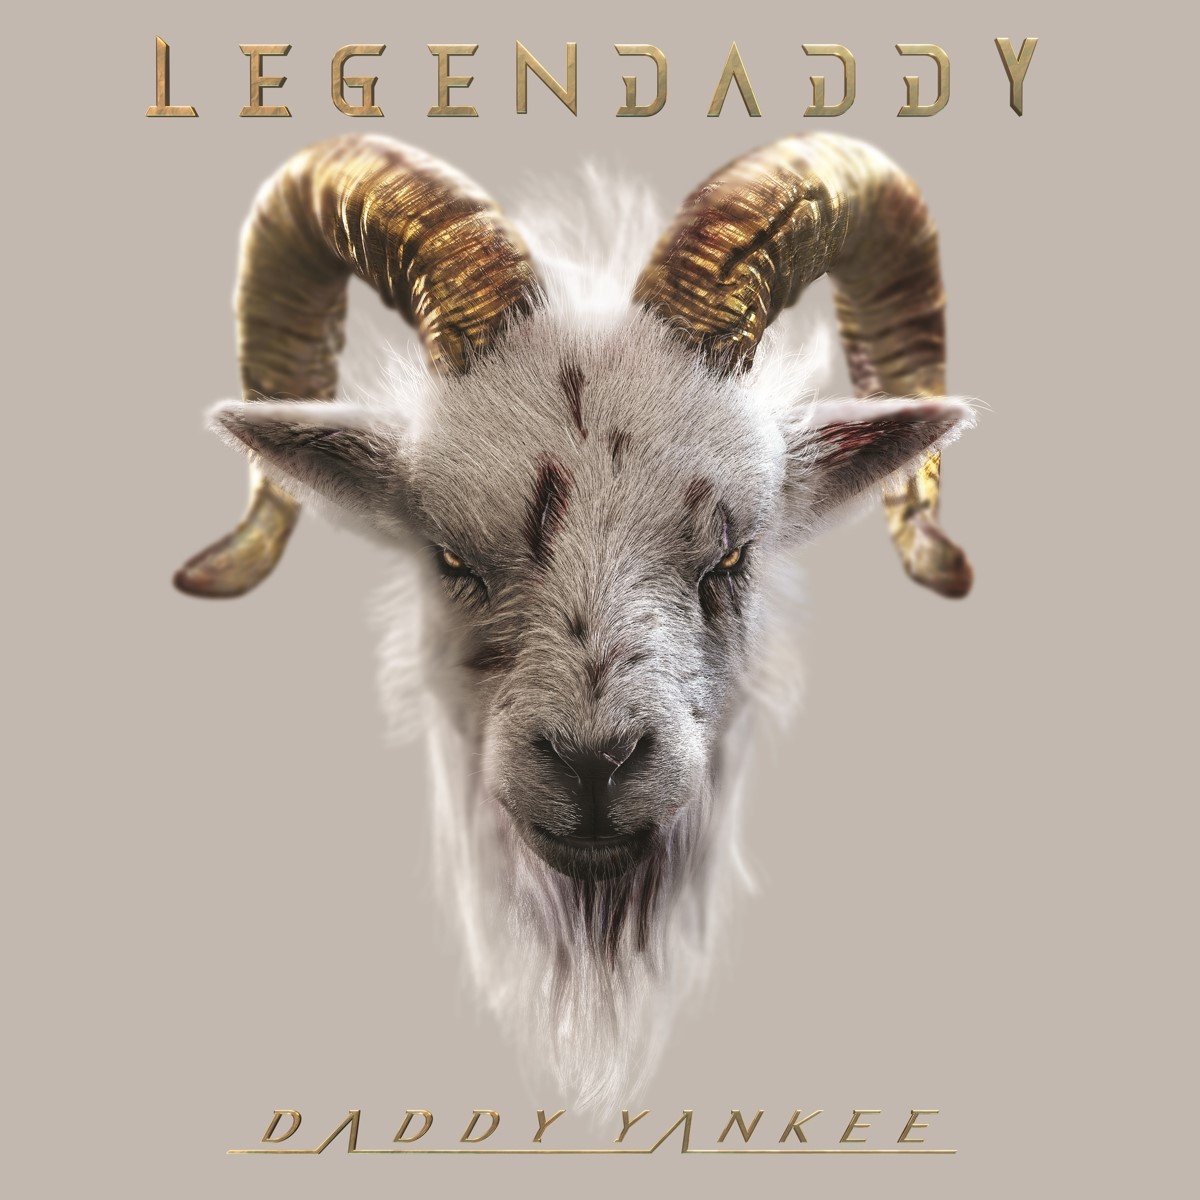 Daddy Yankee - Legendaddy (CD) - Daddy Yankee